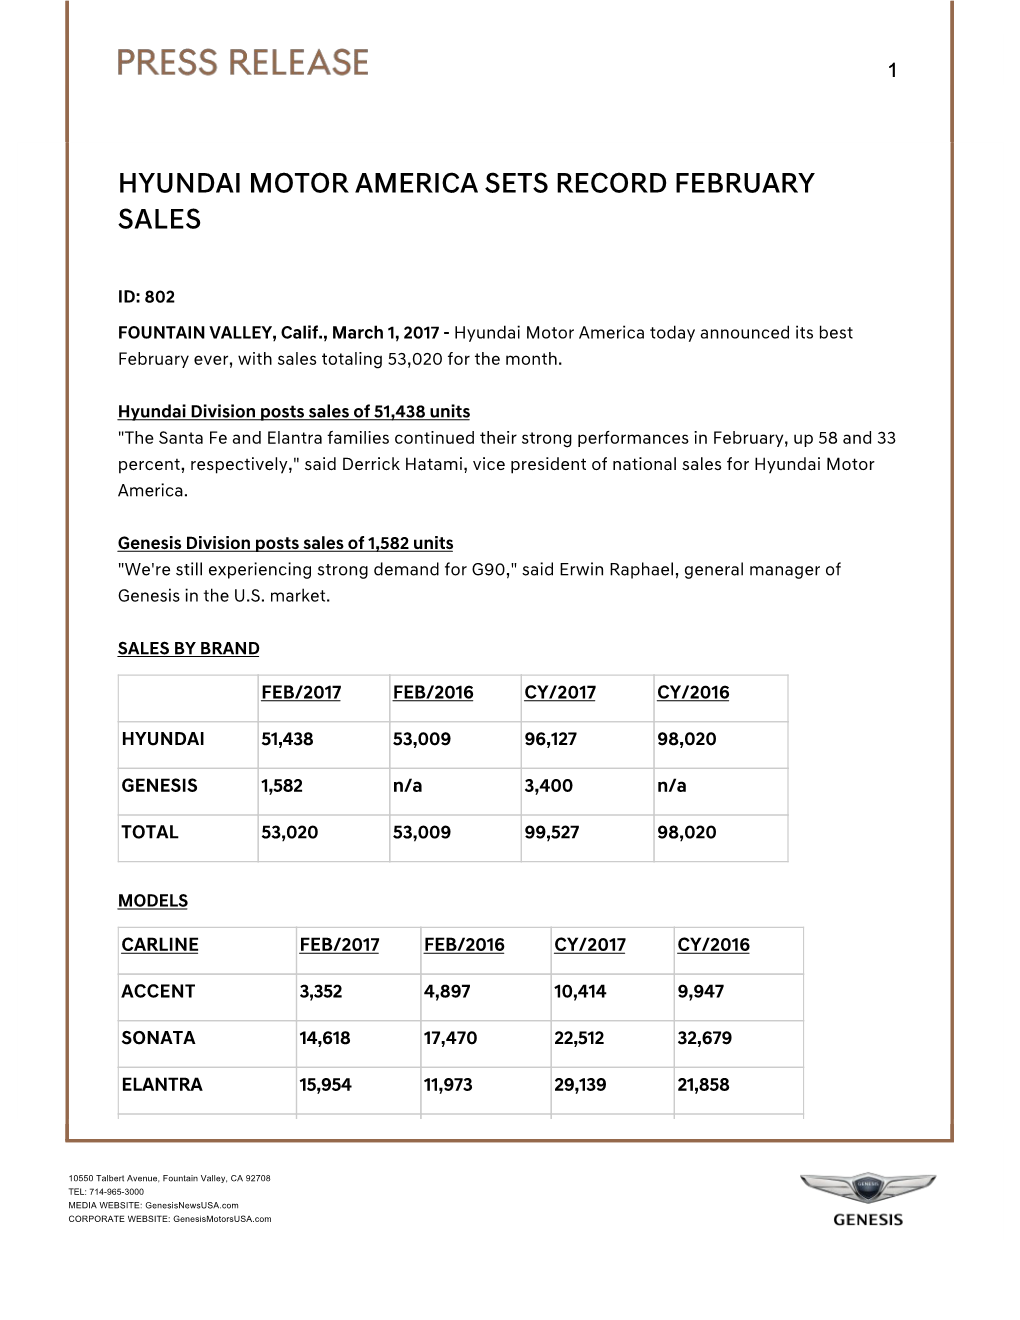 Hyundai Motor America Sets Record February Sales